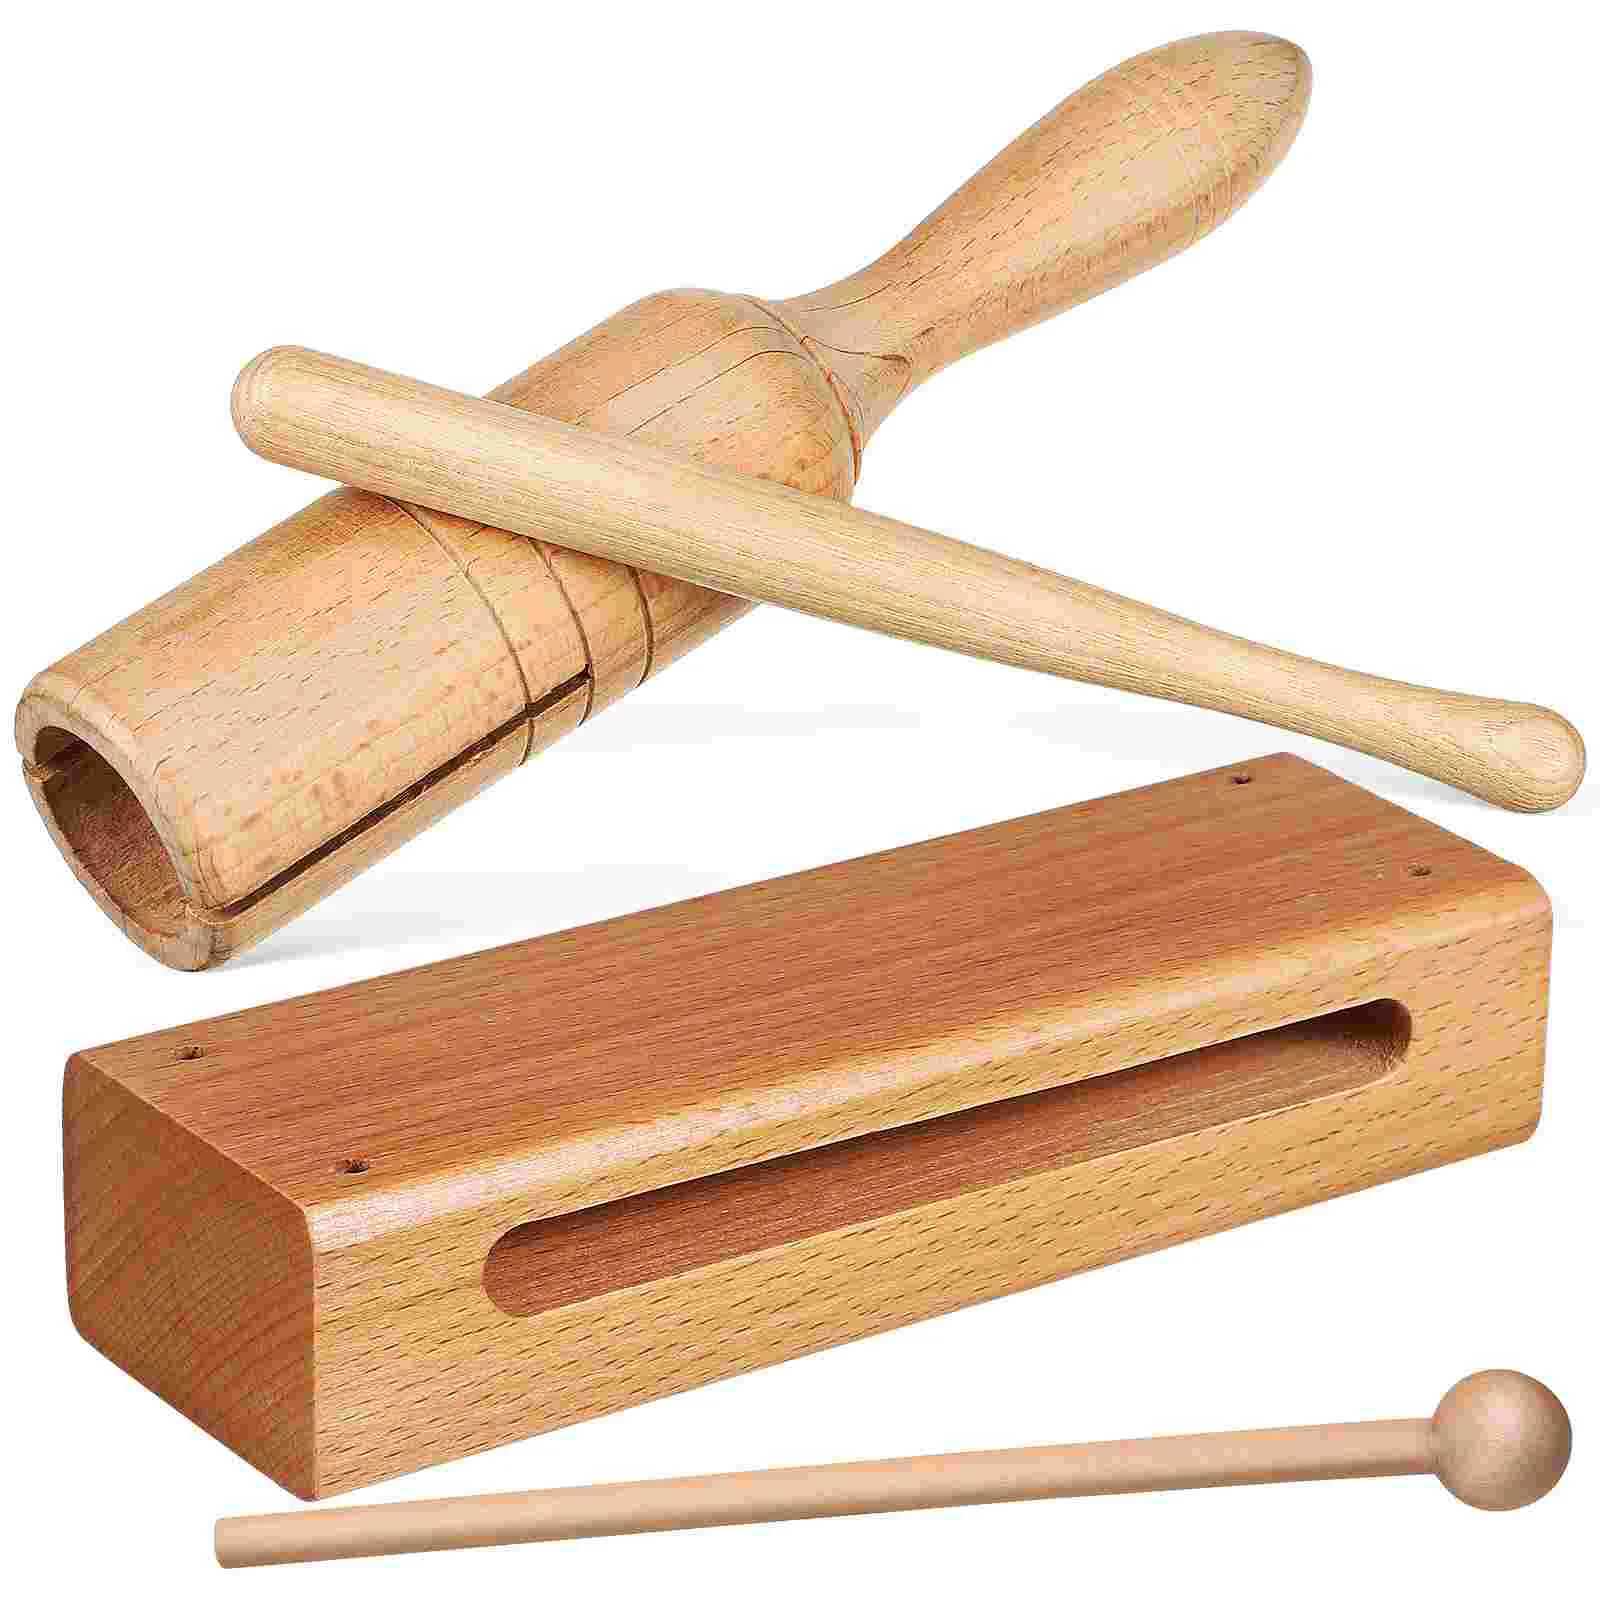 

2 Sets Orff Instrument Percussion Wood Handheld Block Building Blocks Rhythm Wooden Mallets Large